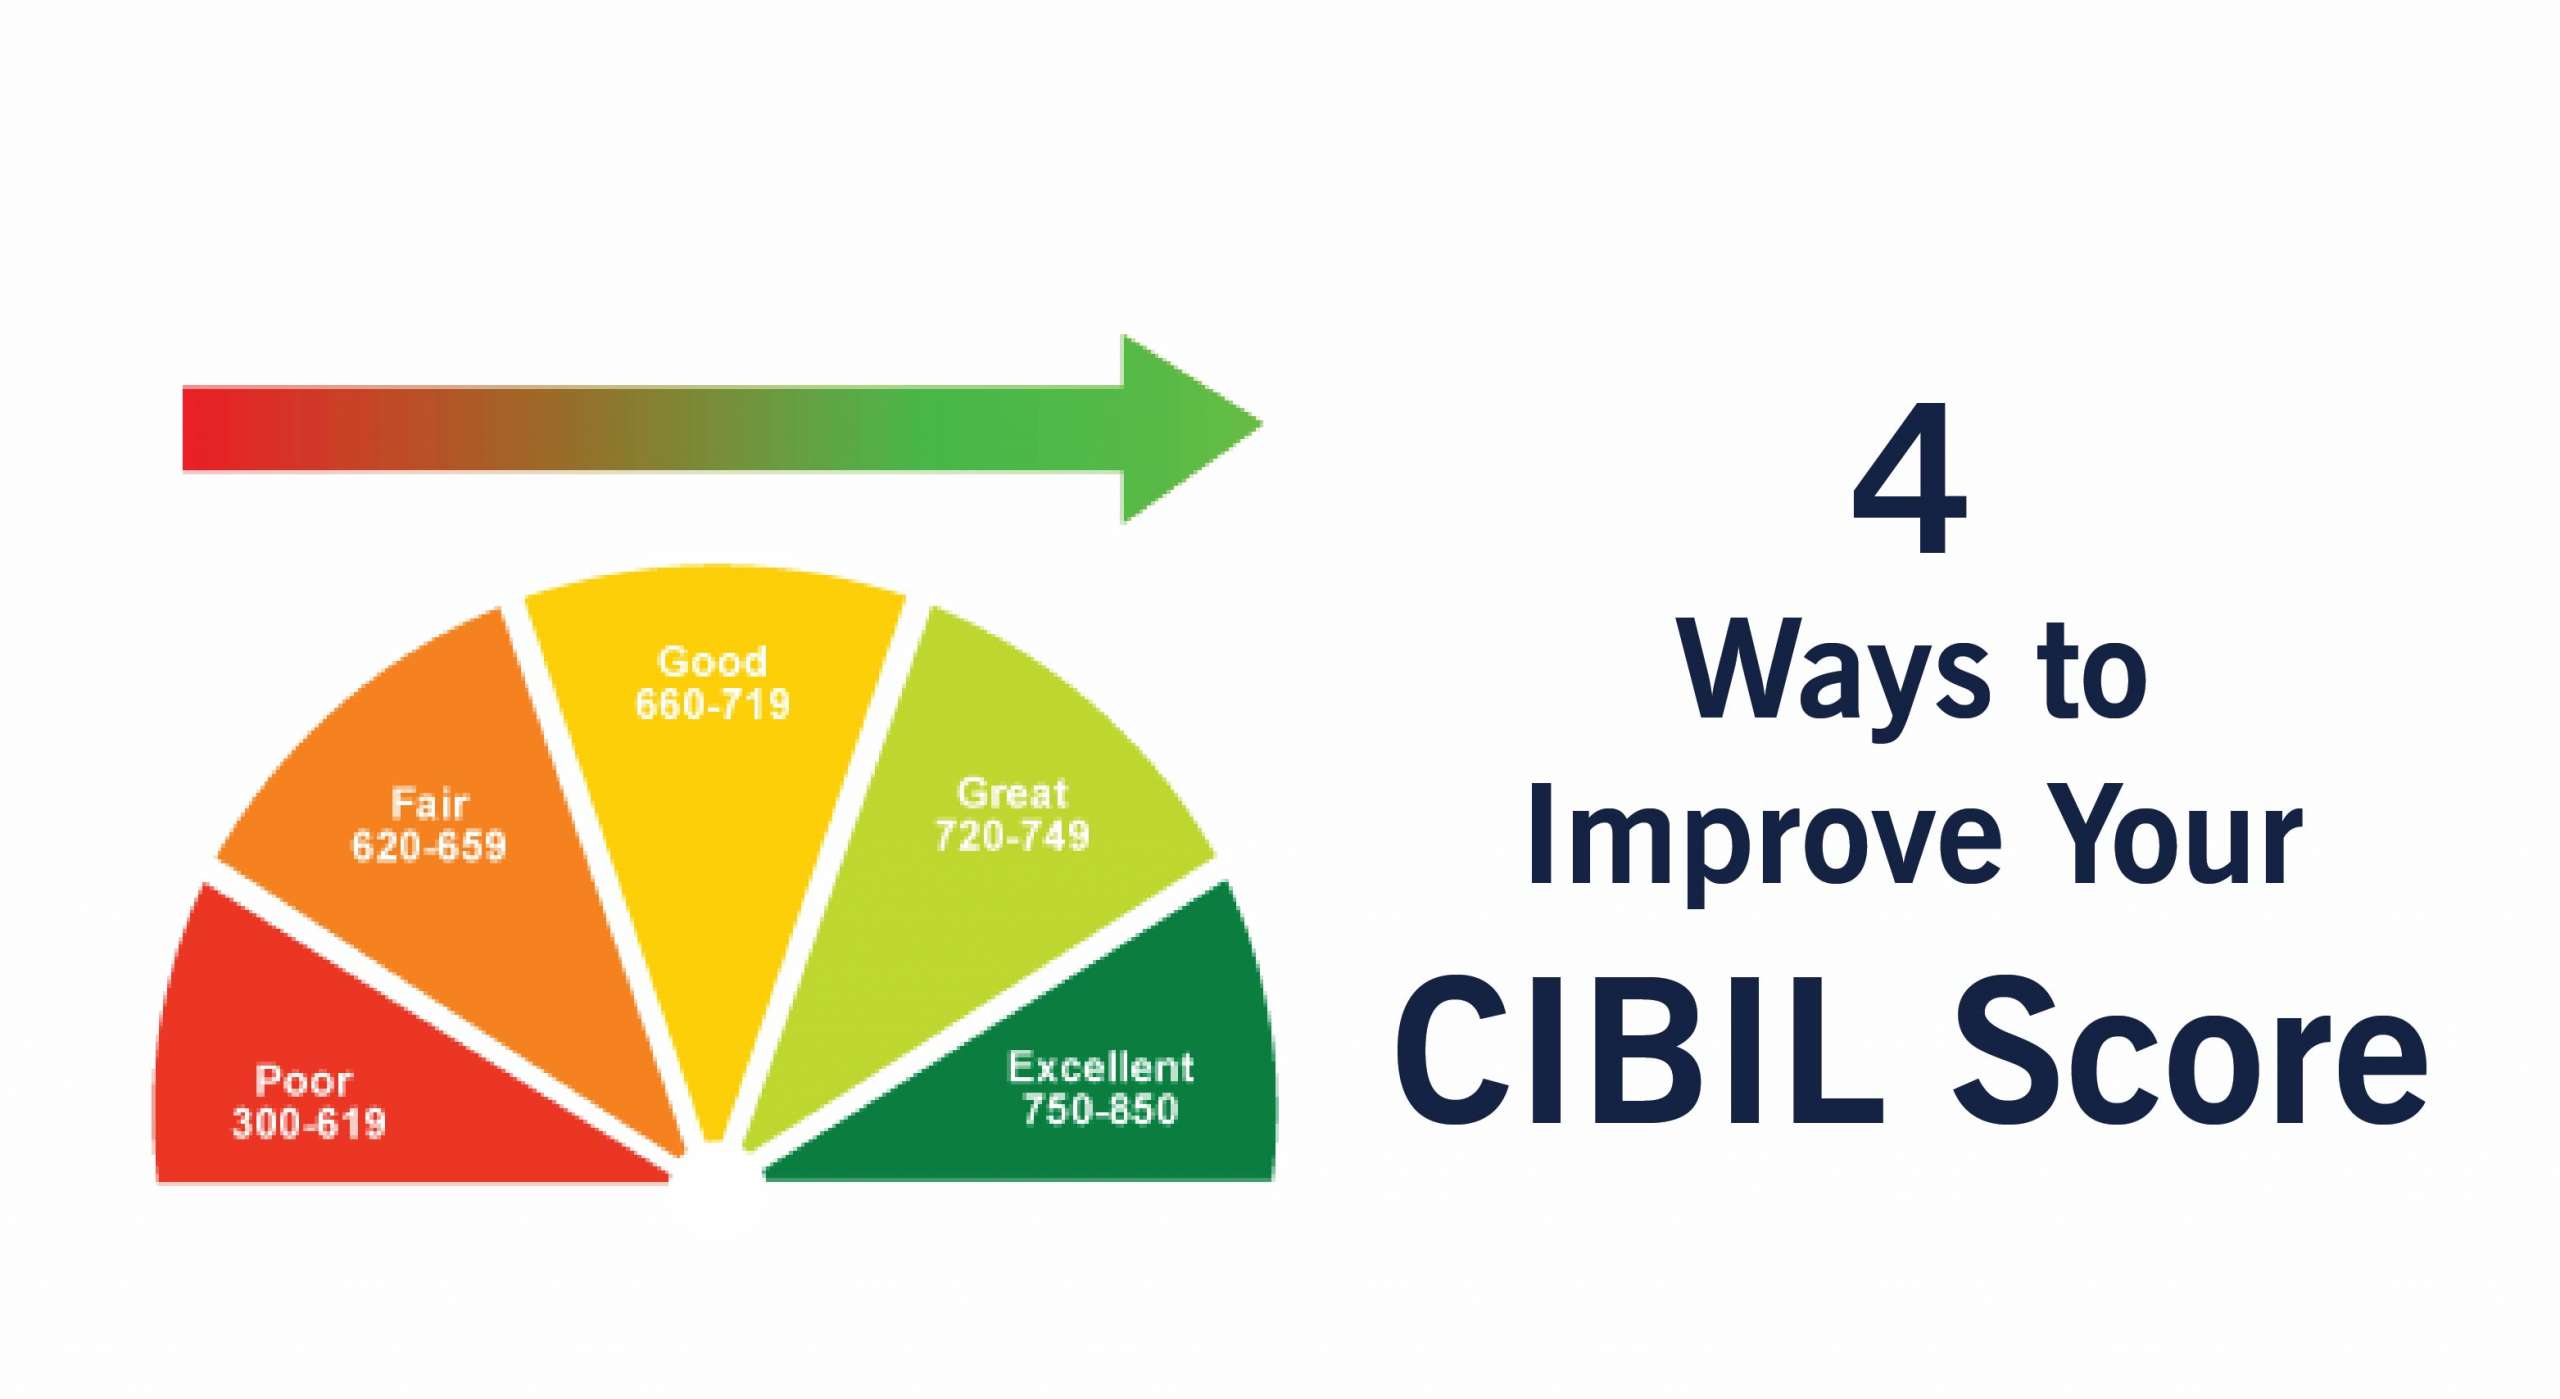 Smart ways to improve your Cibil score